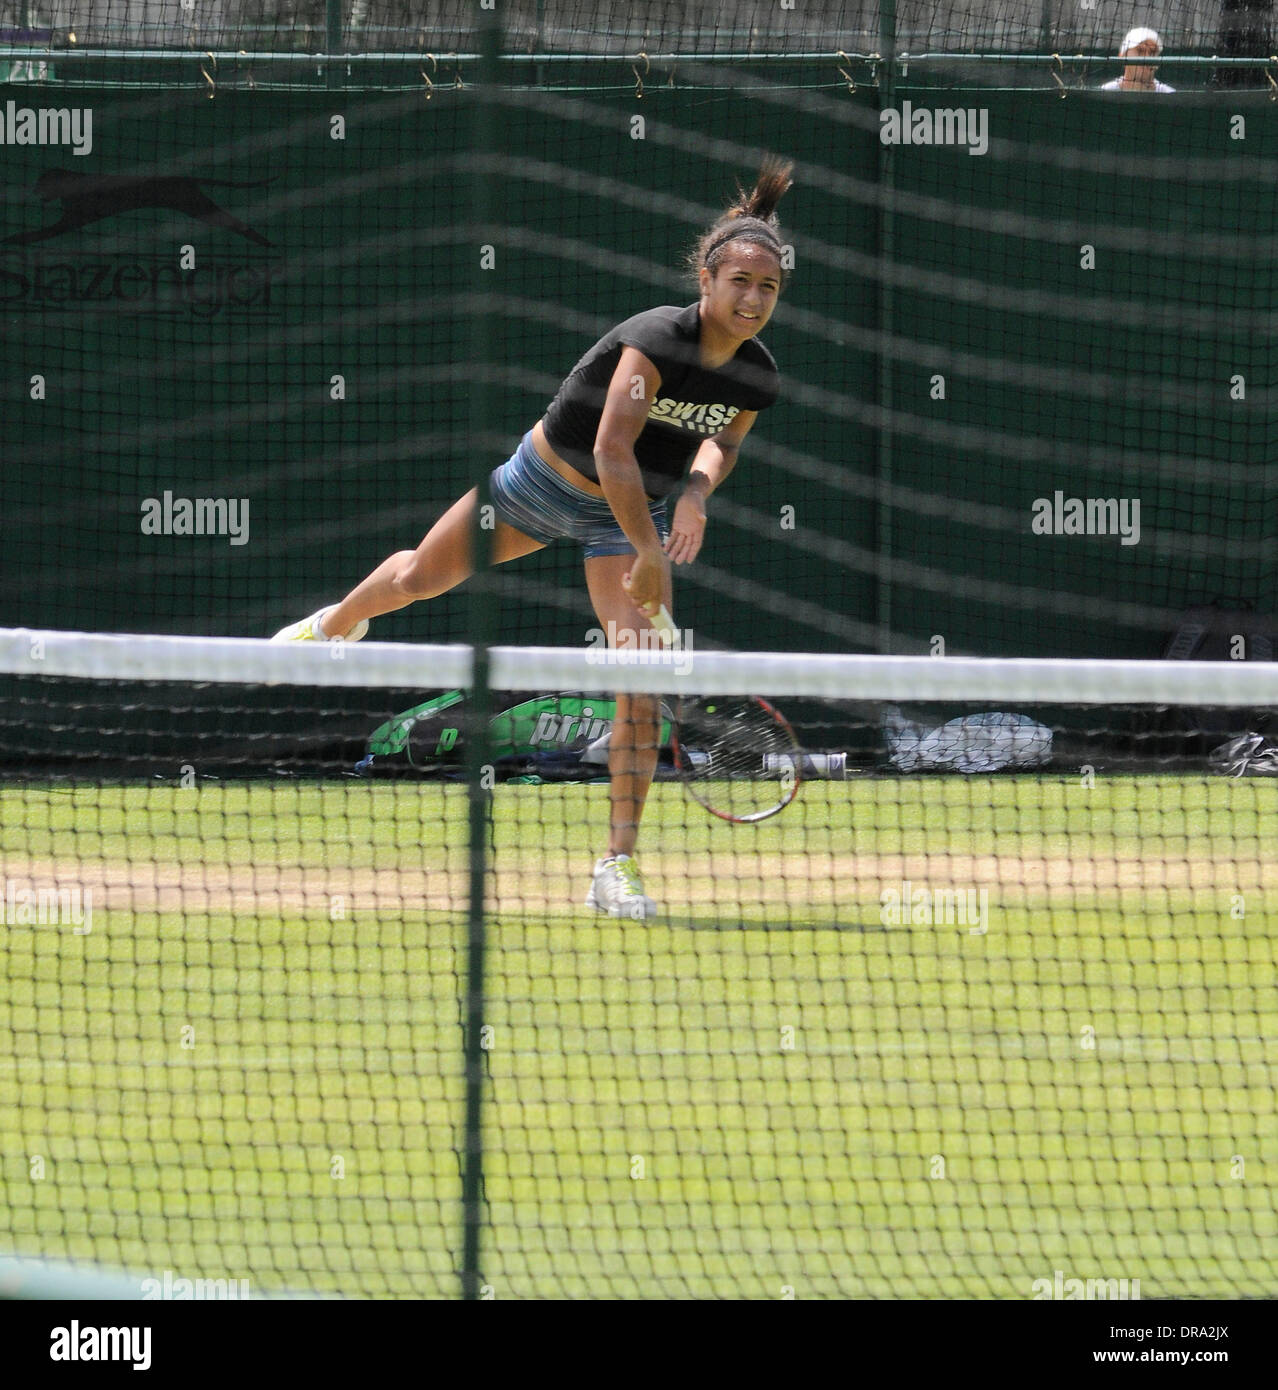 Heather Watson arrivando a tutti i Club in Inghilterra per la formazione di Wimbledon, Inghilterra - 29.06.12 Foto Stock